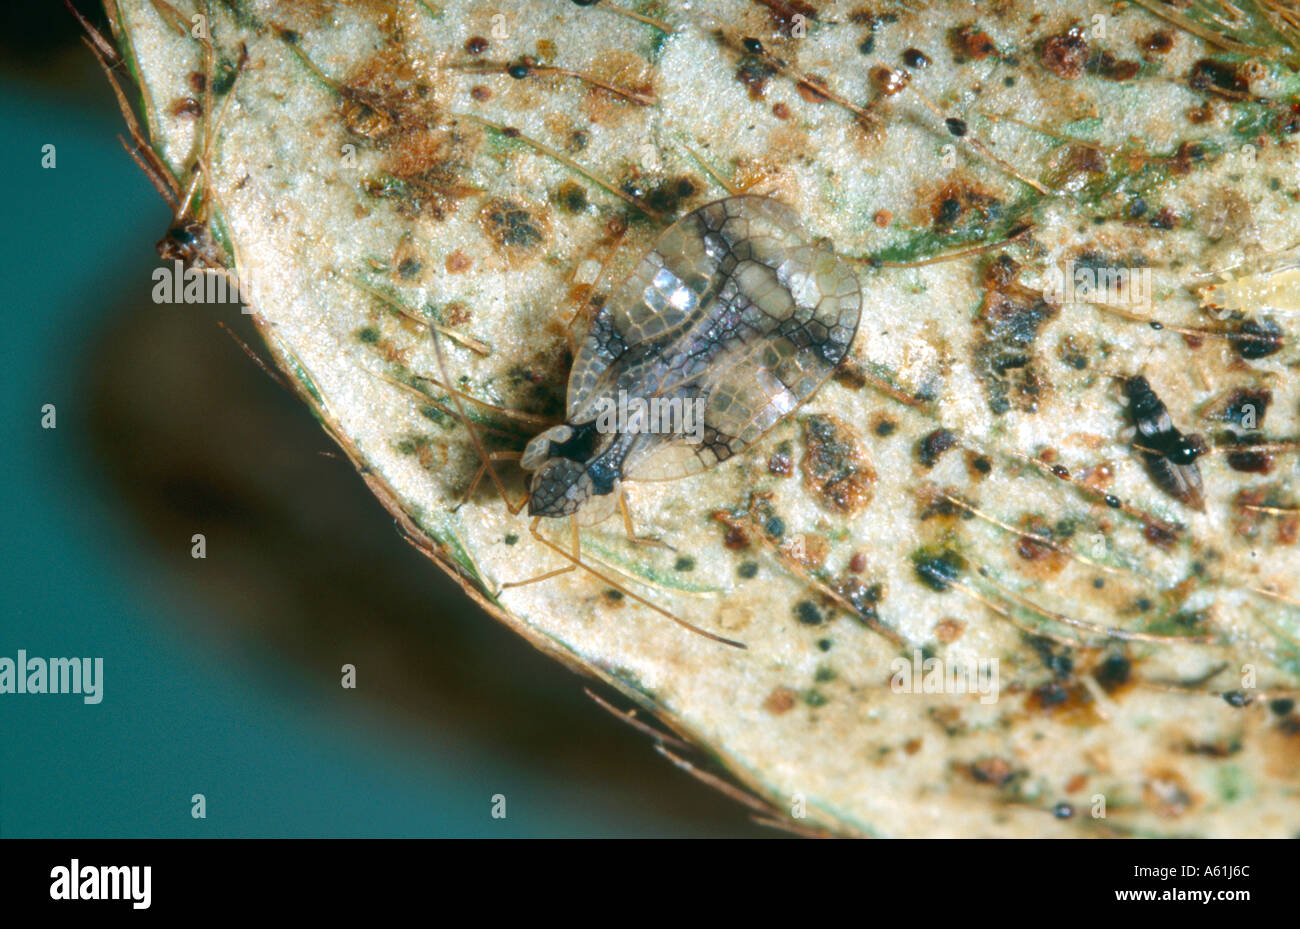 Azalea lace bug on underside of Azalea leaf Stock Photo